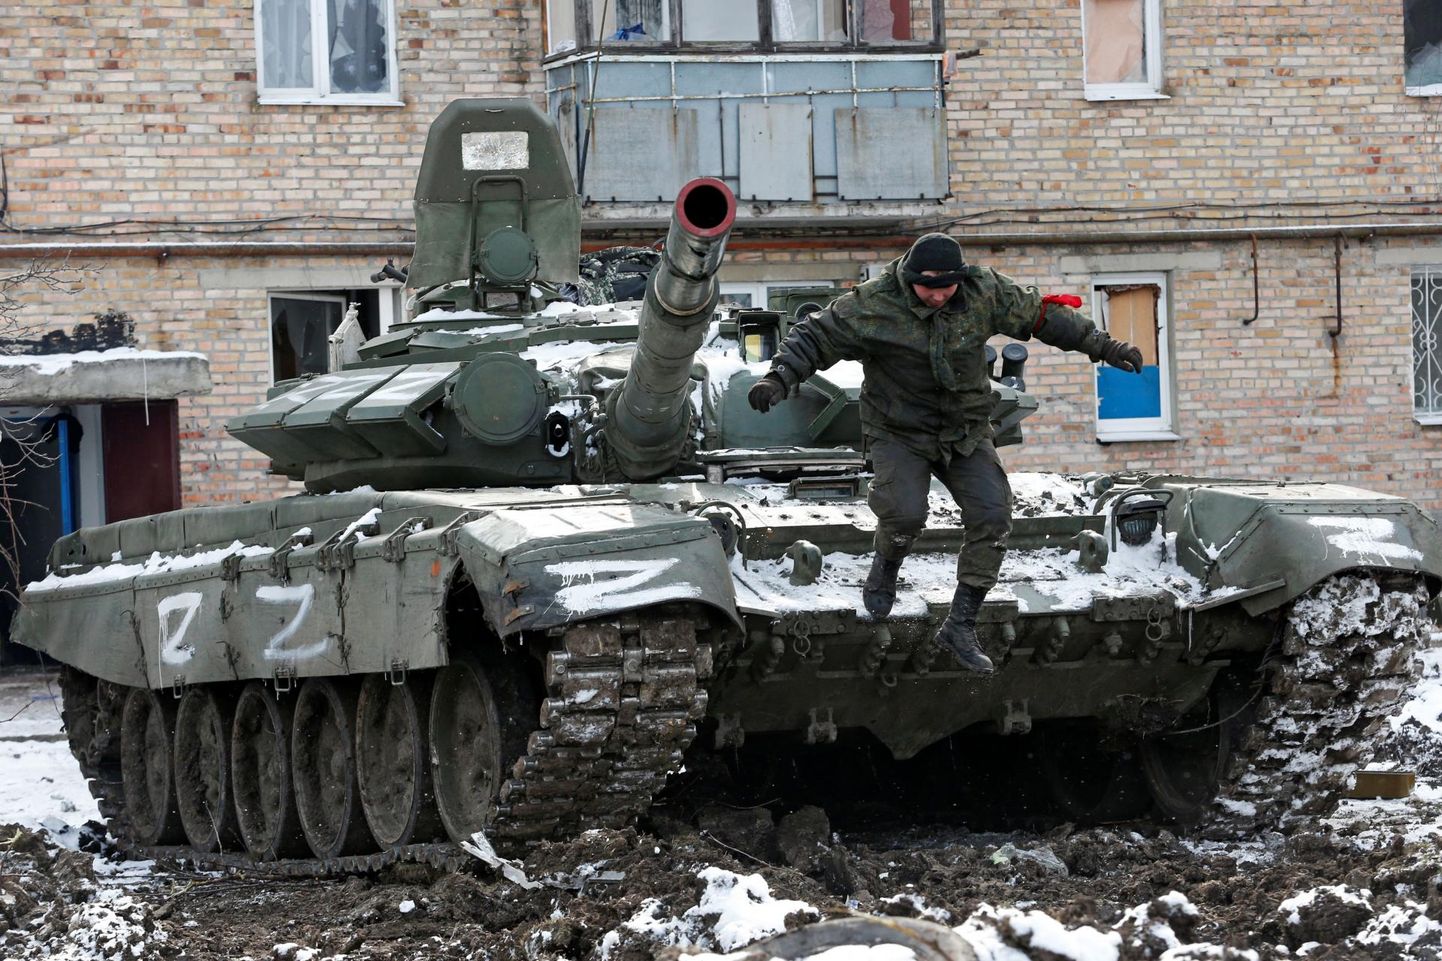 Vene tank ja sõdur Ukrainas Donetski oblastis.